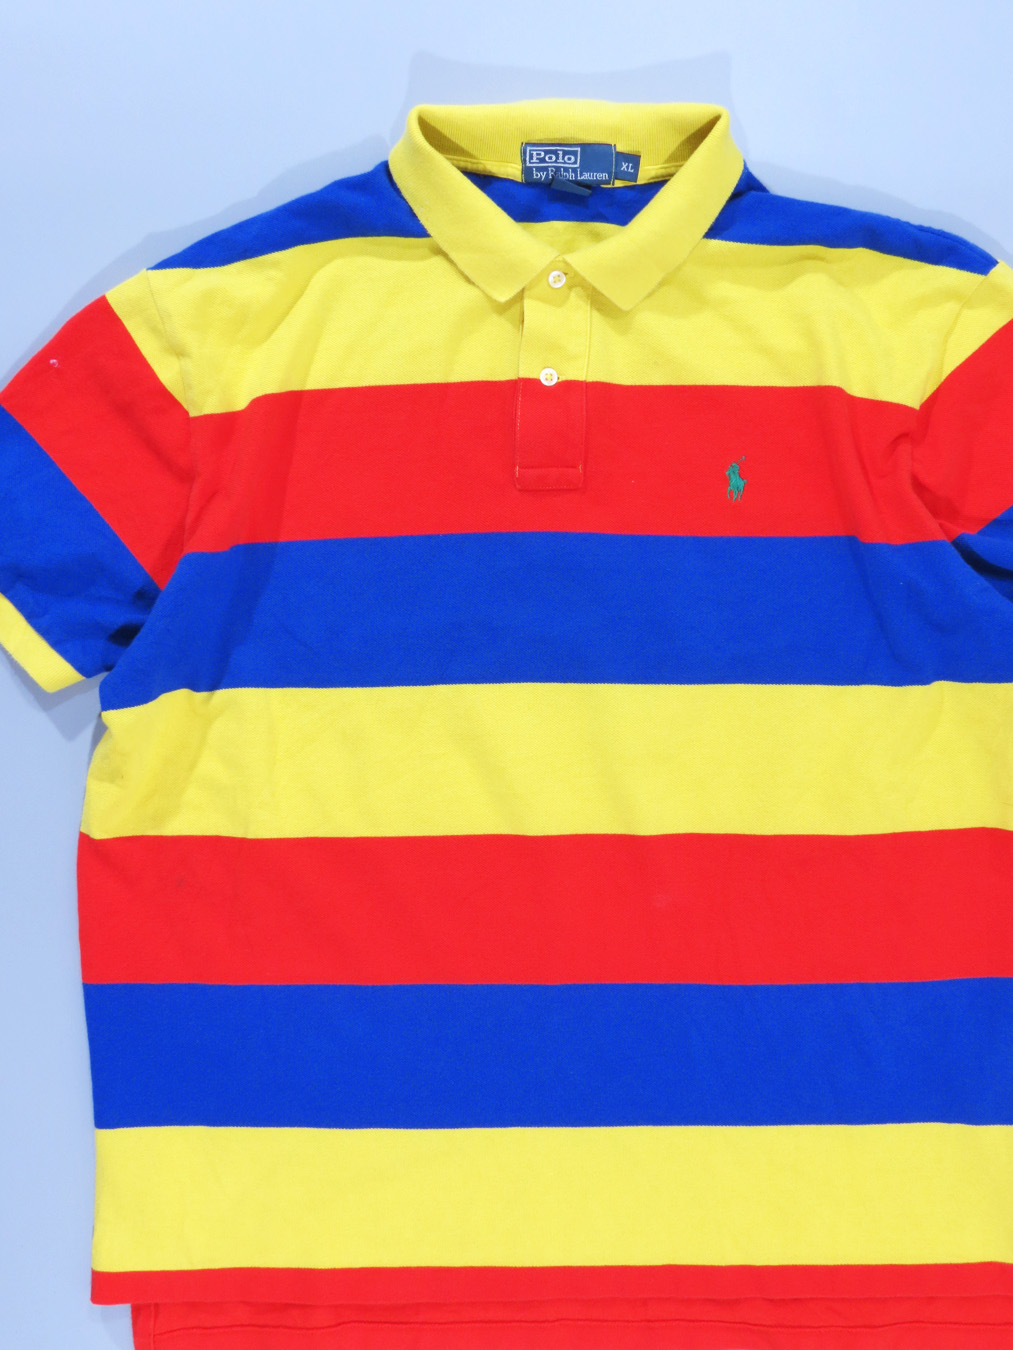 Polo Ralph Lauren Yellow Blue Striped Polo Shirt - 5 Star Vintage